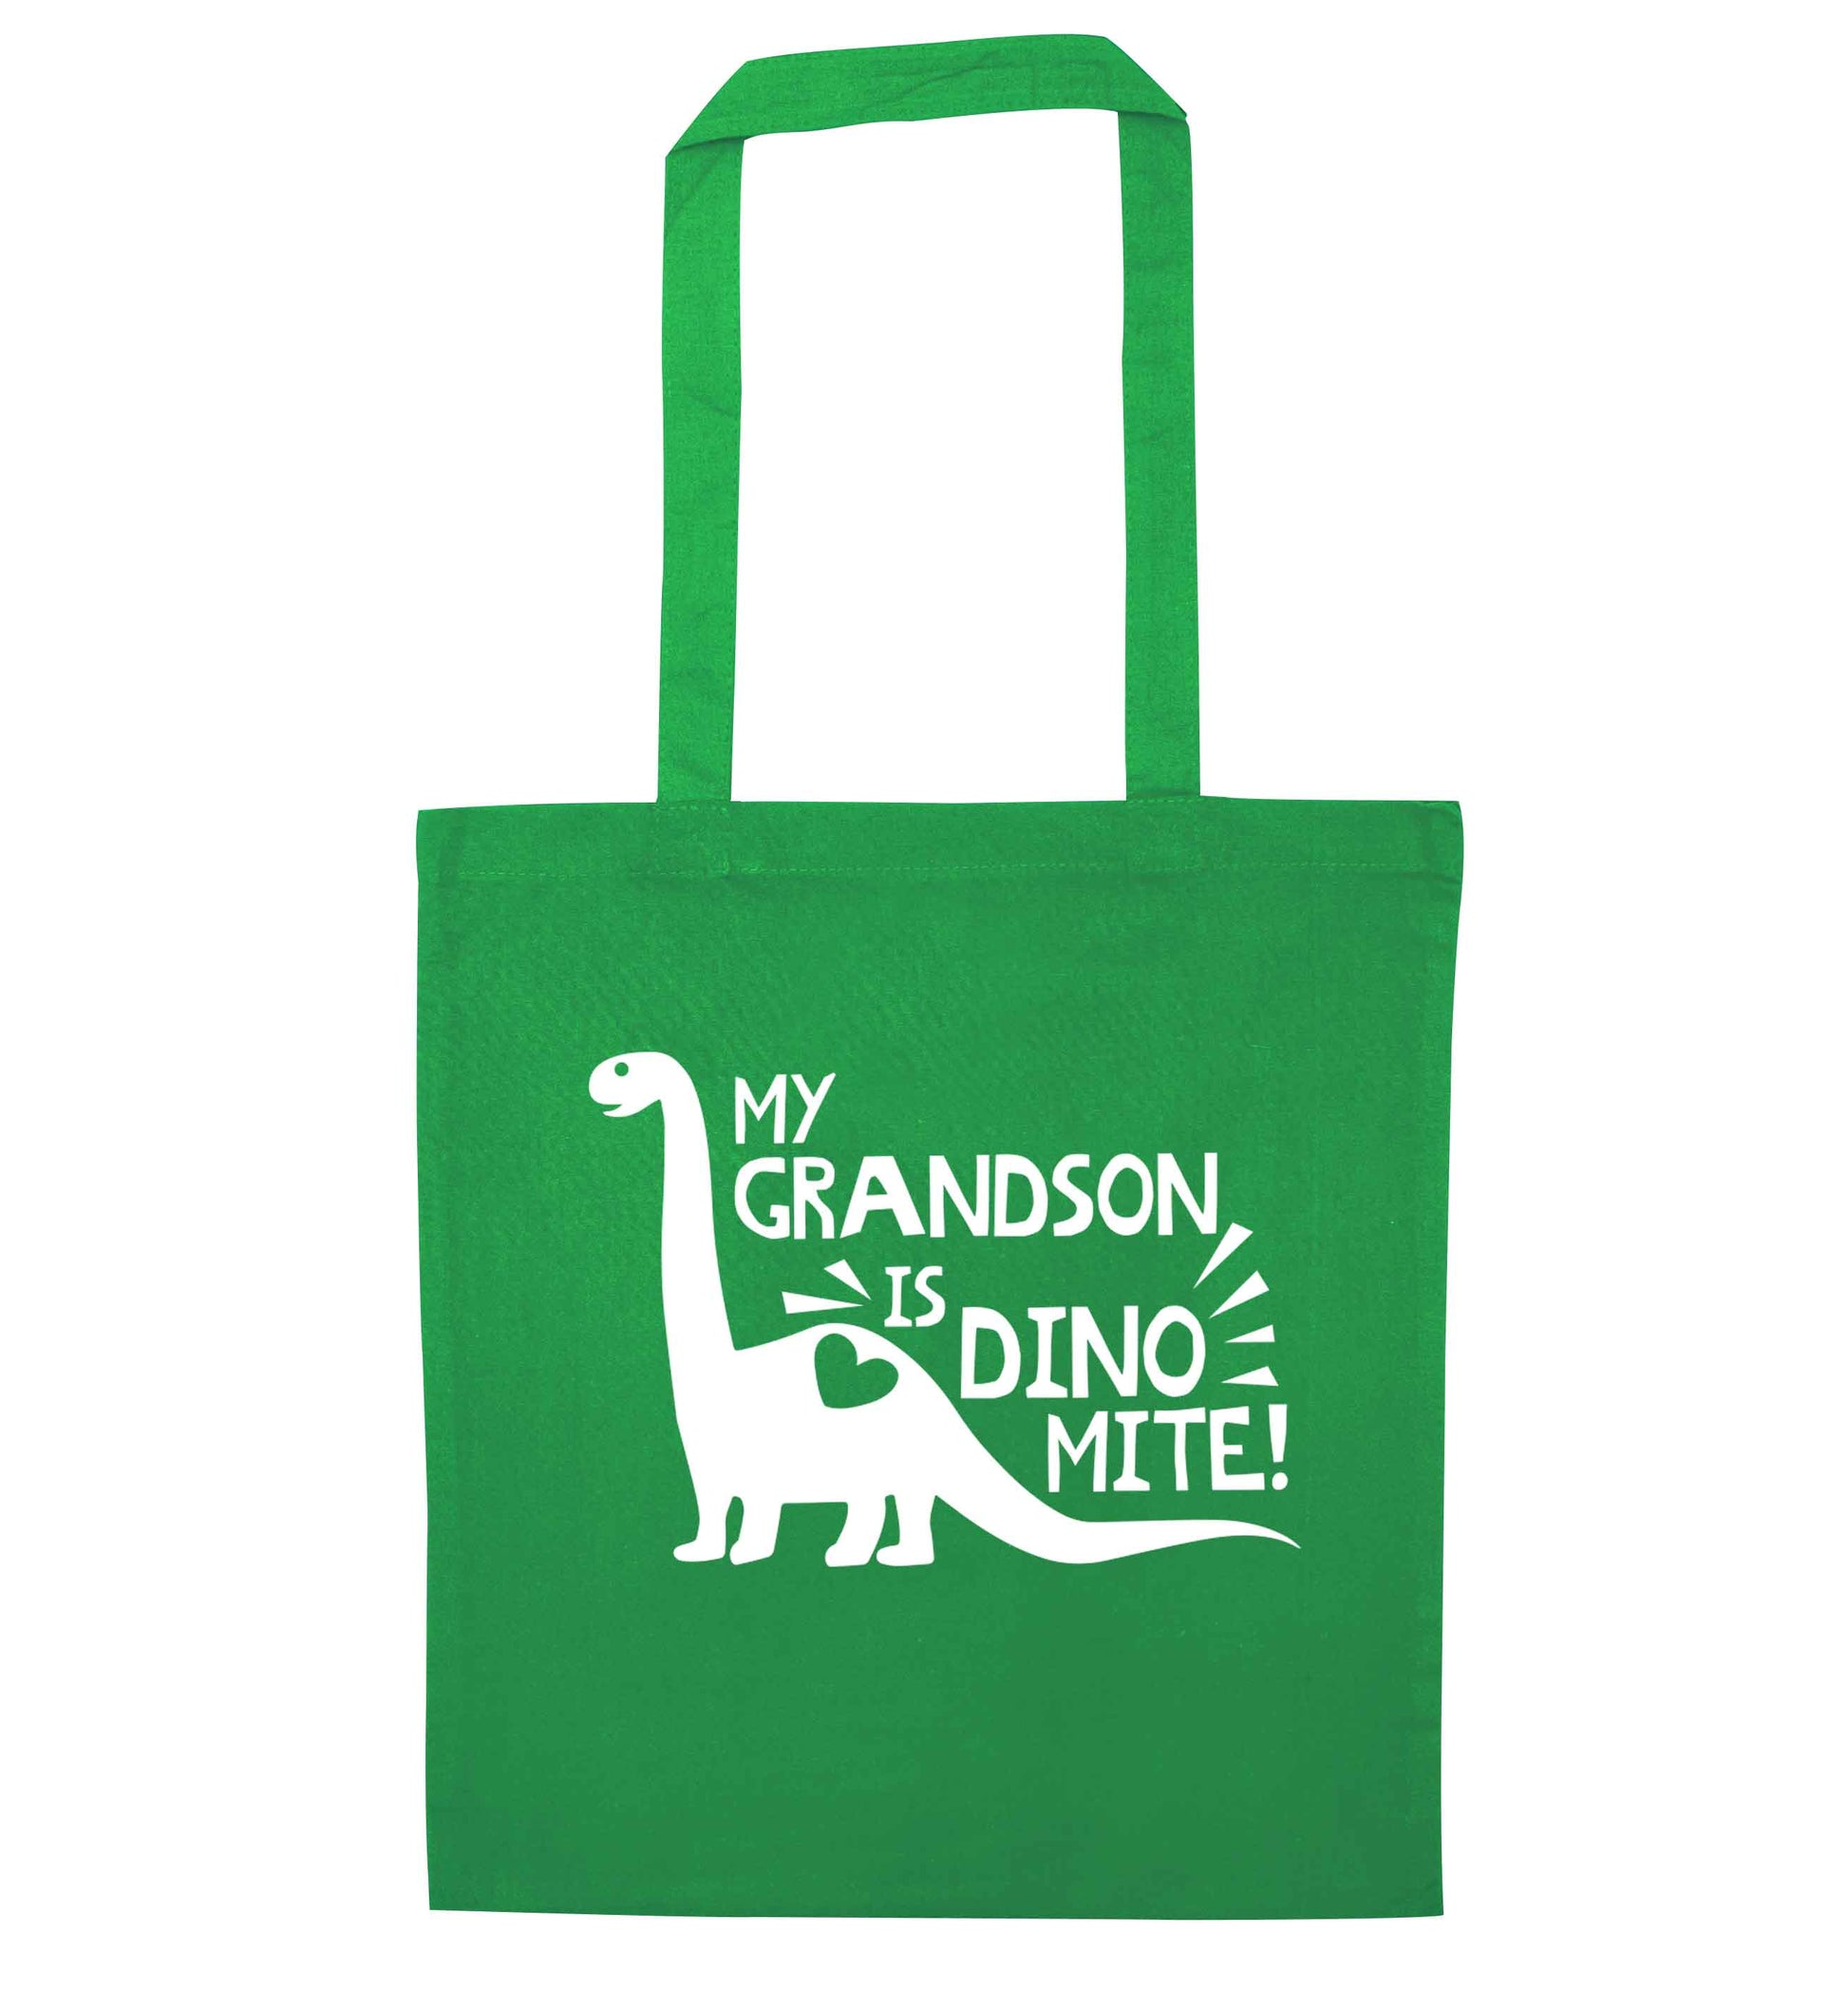 My grandson is dinomite! green tote bag